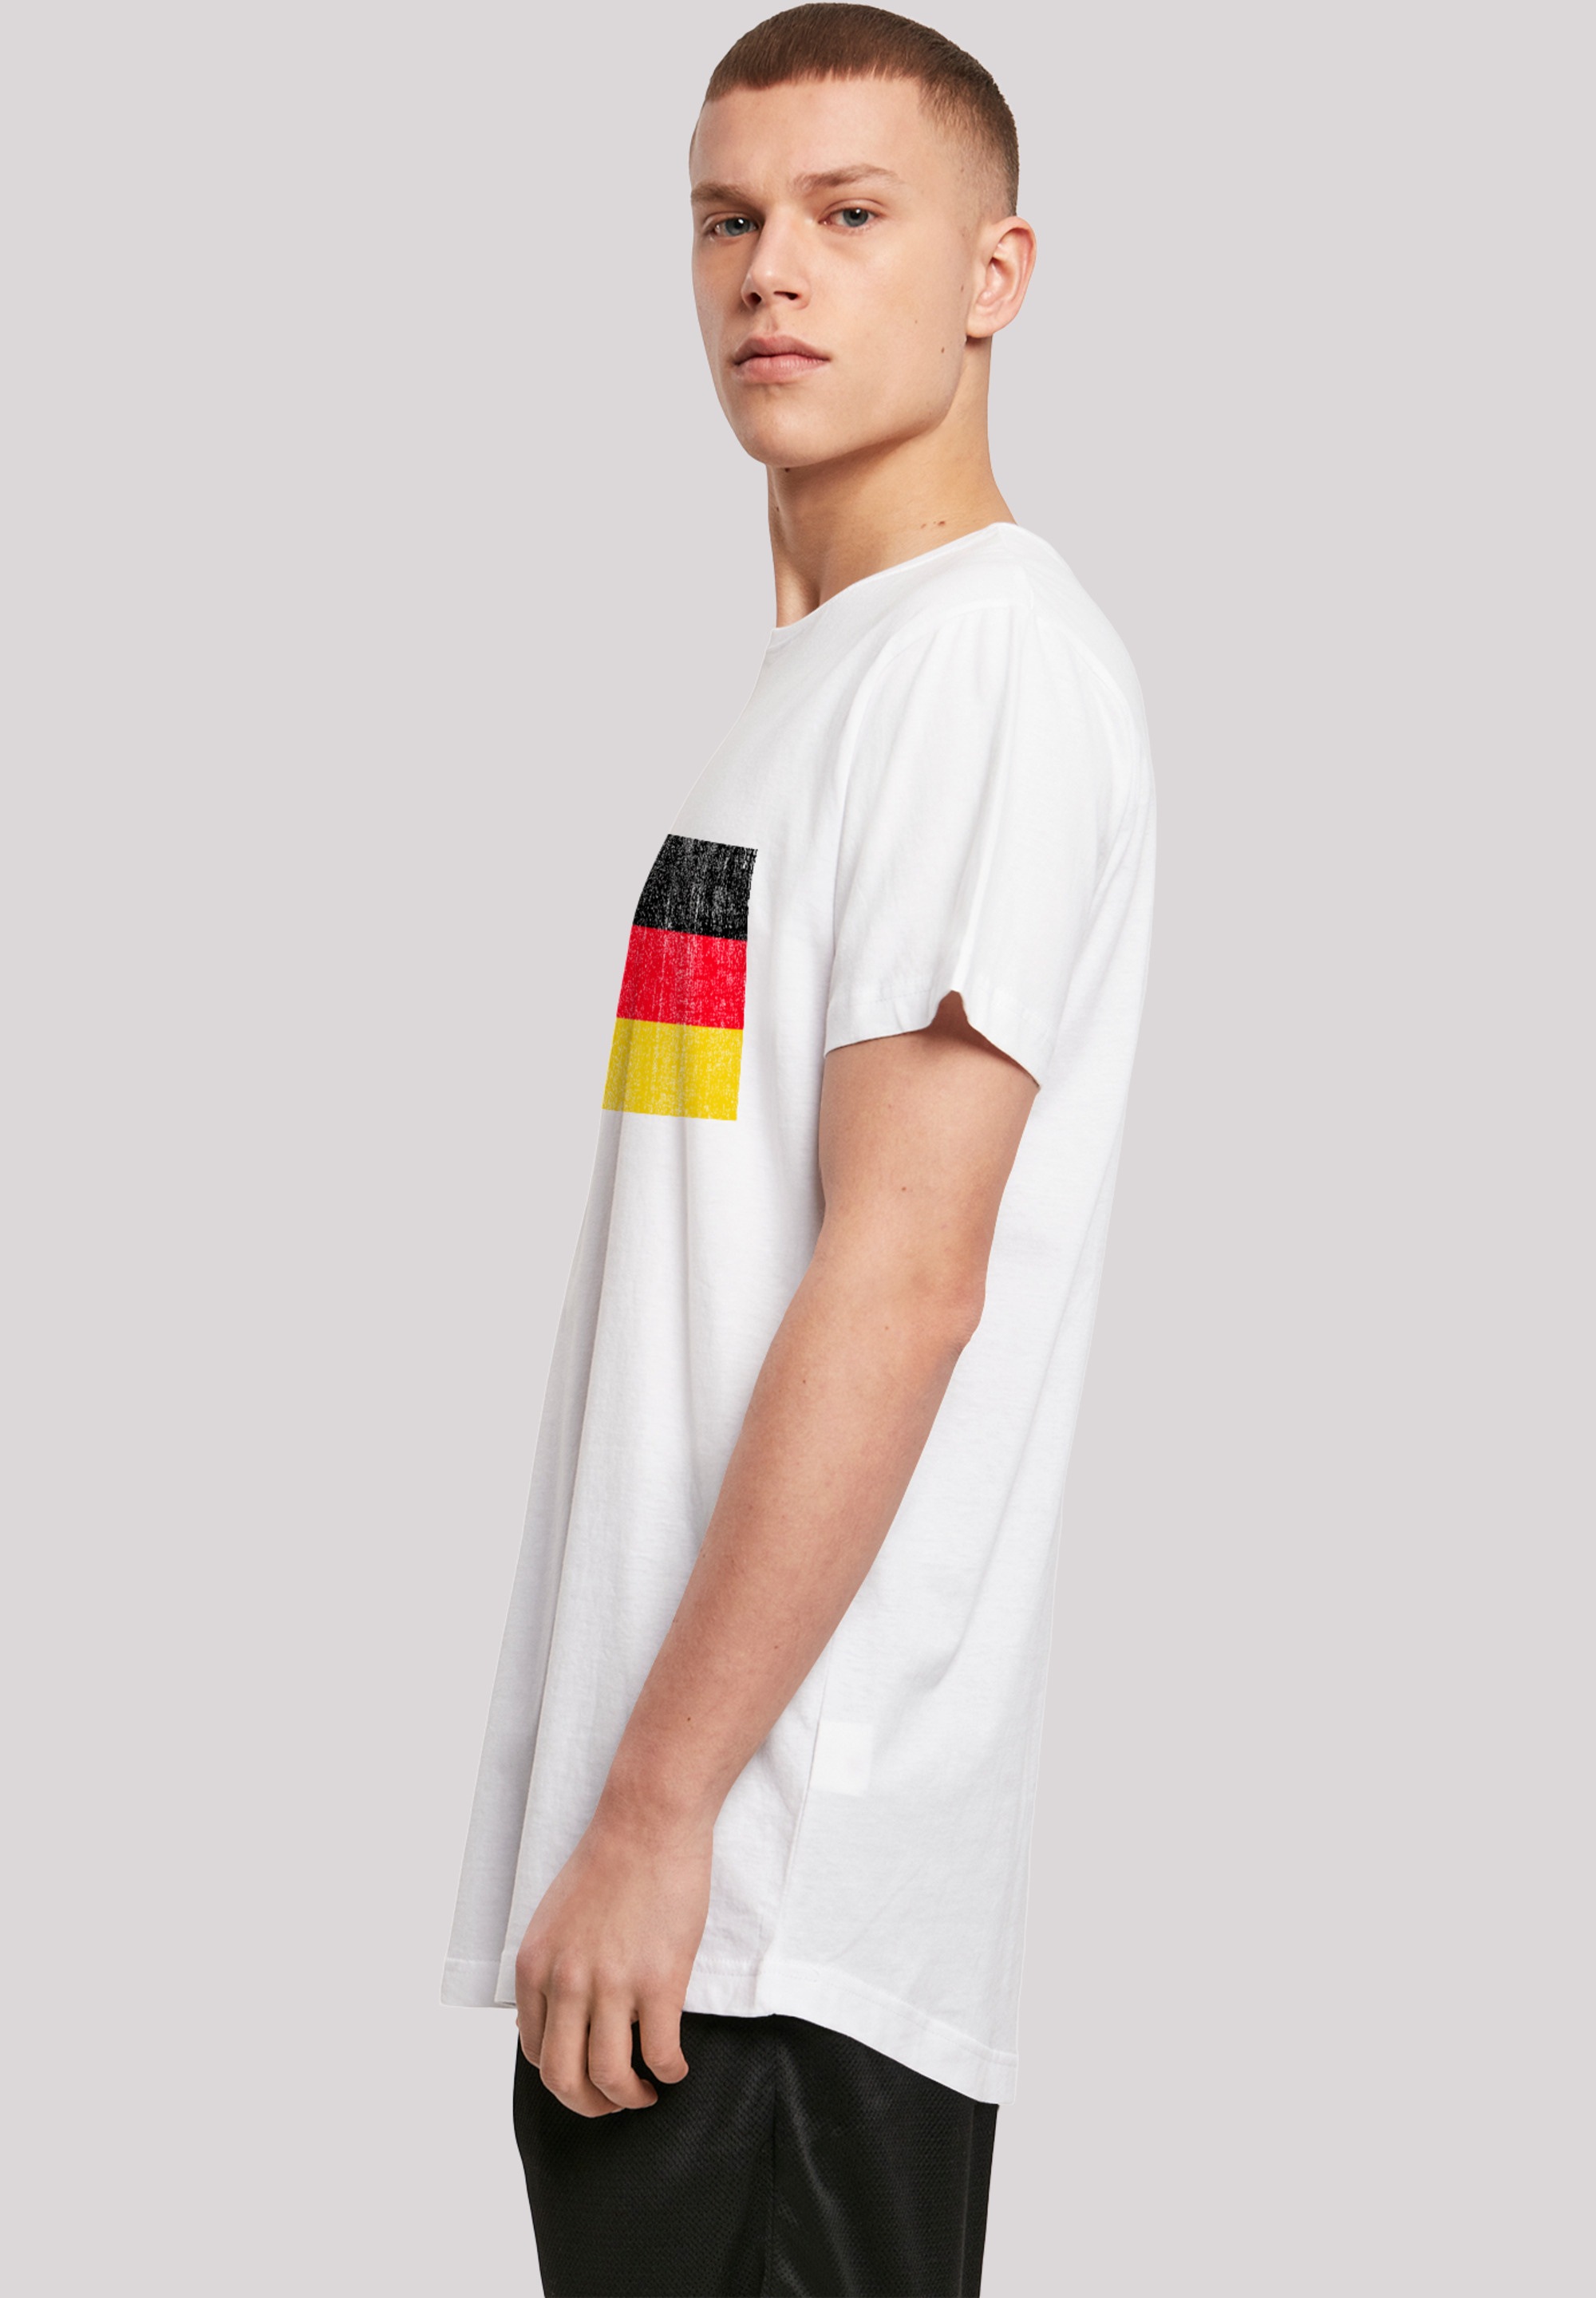 Print distressed«, | Friday Flagge »Germany F4NT4STIC BAUR T-Shirt Deutschland Black